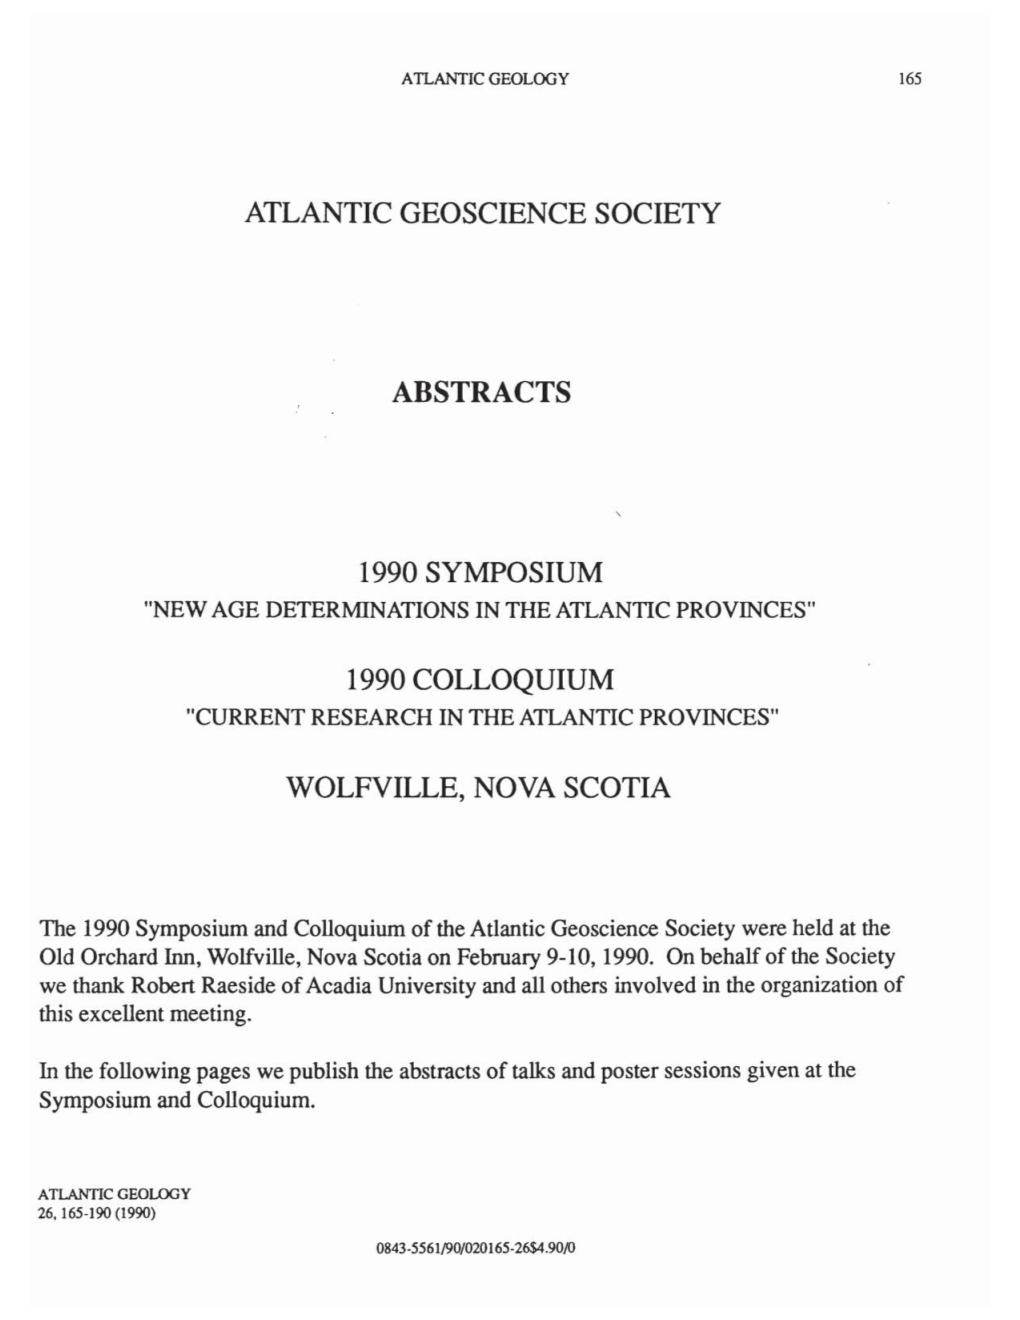 Atlantic Geoscience Society Abstracts 1990 Symposium